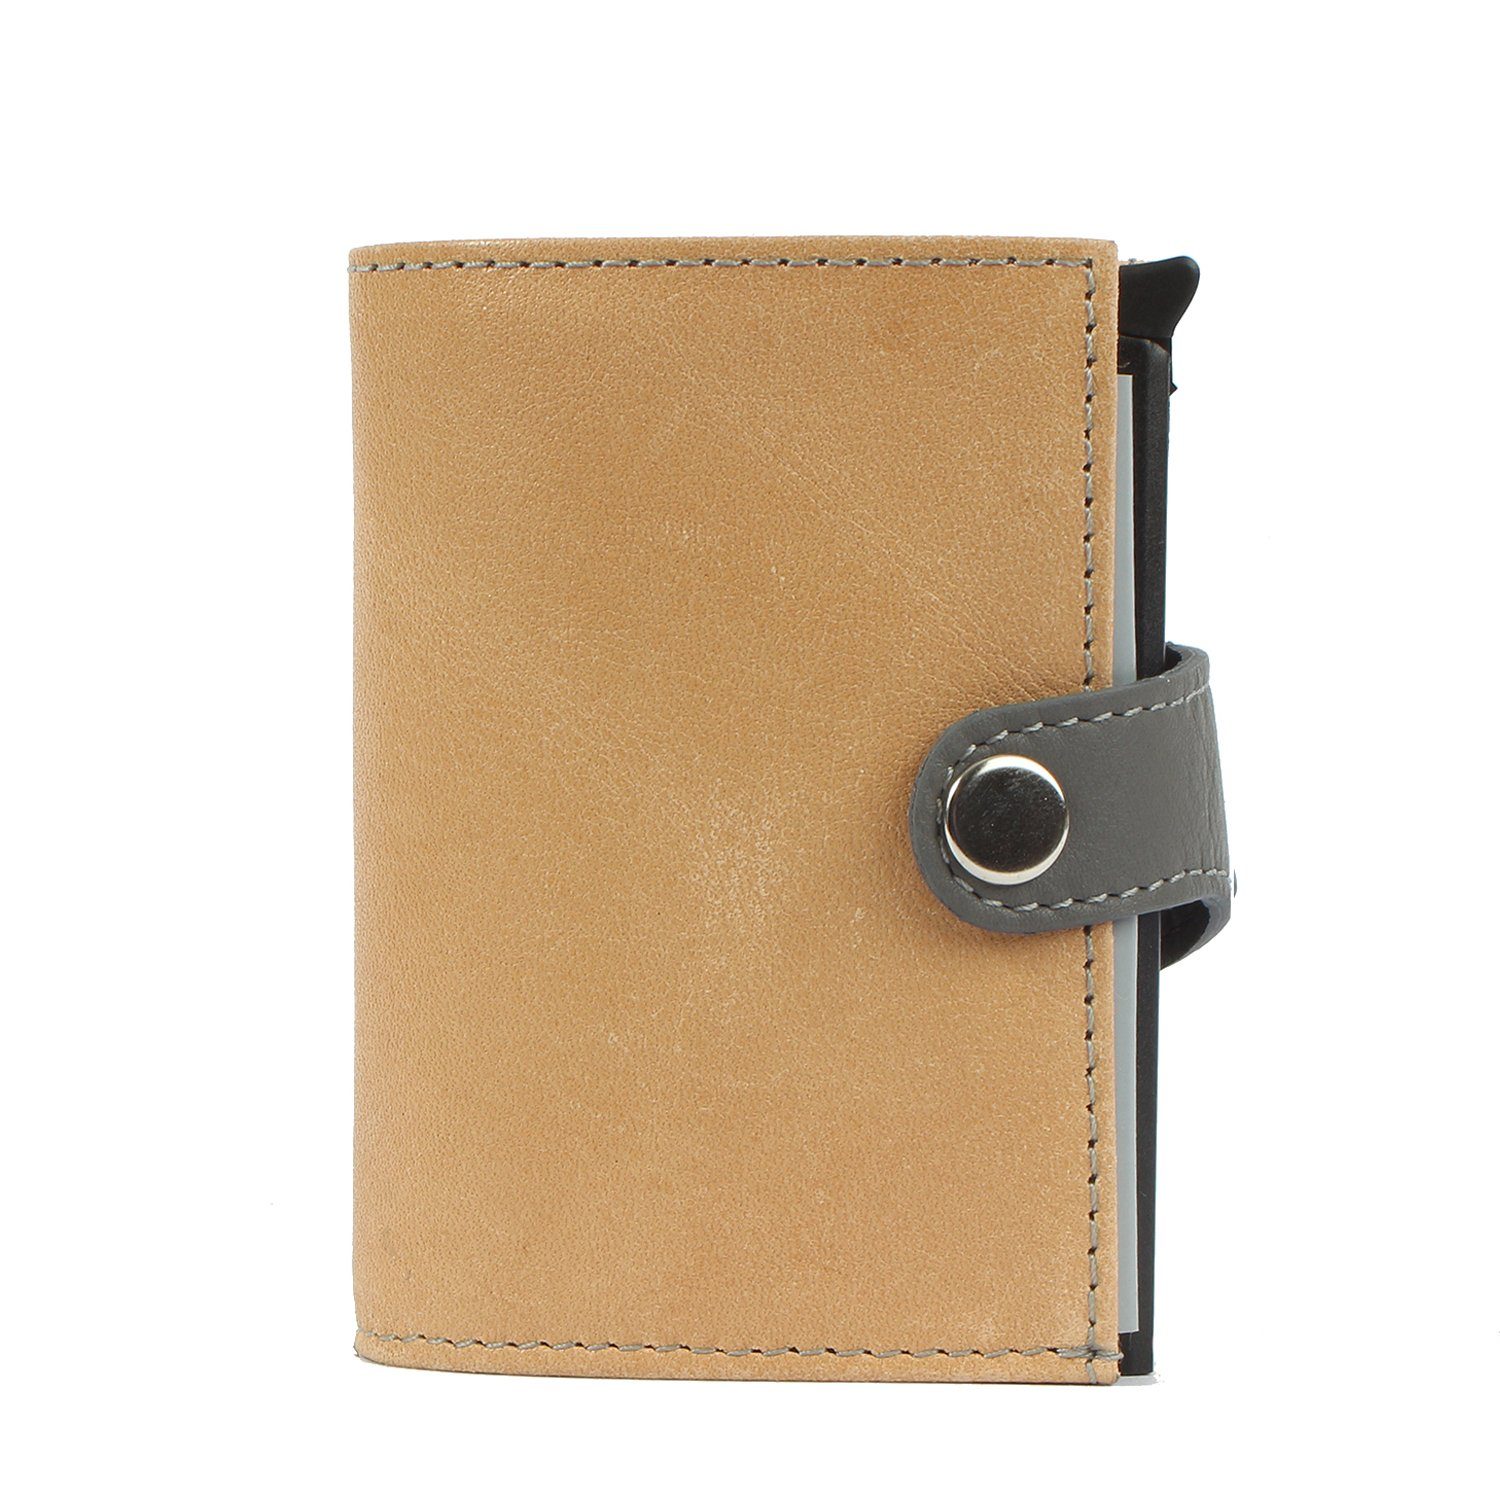 Margelisch Mini double natural aus leather, Geldbörse Leder Kreditkartenbörse noonyu RFID Upcycling